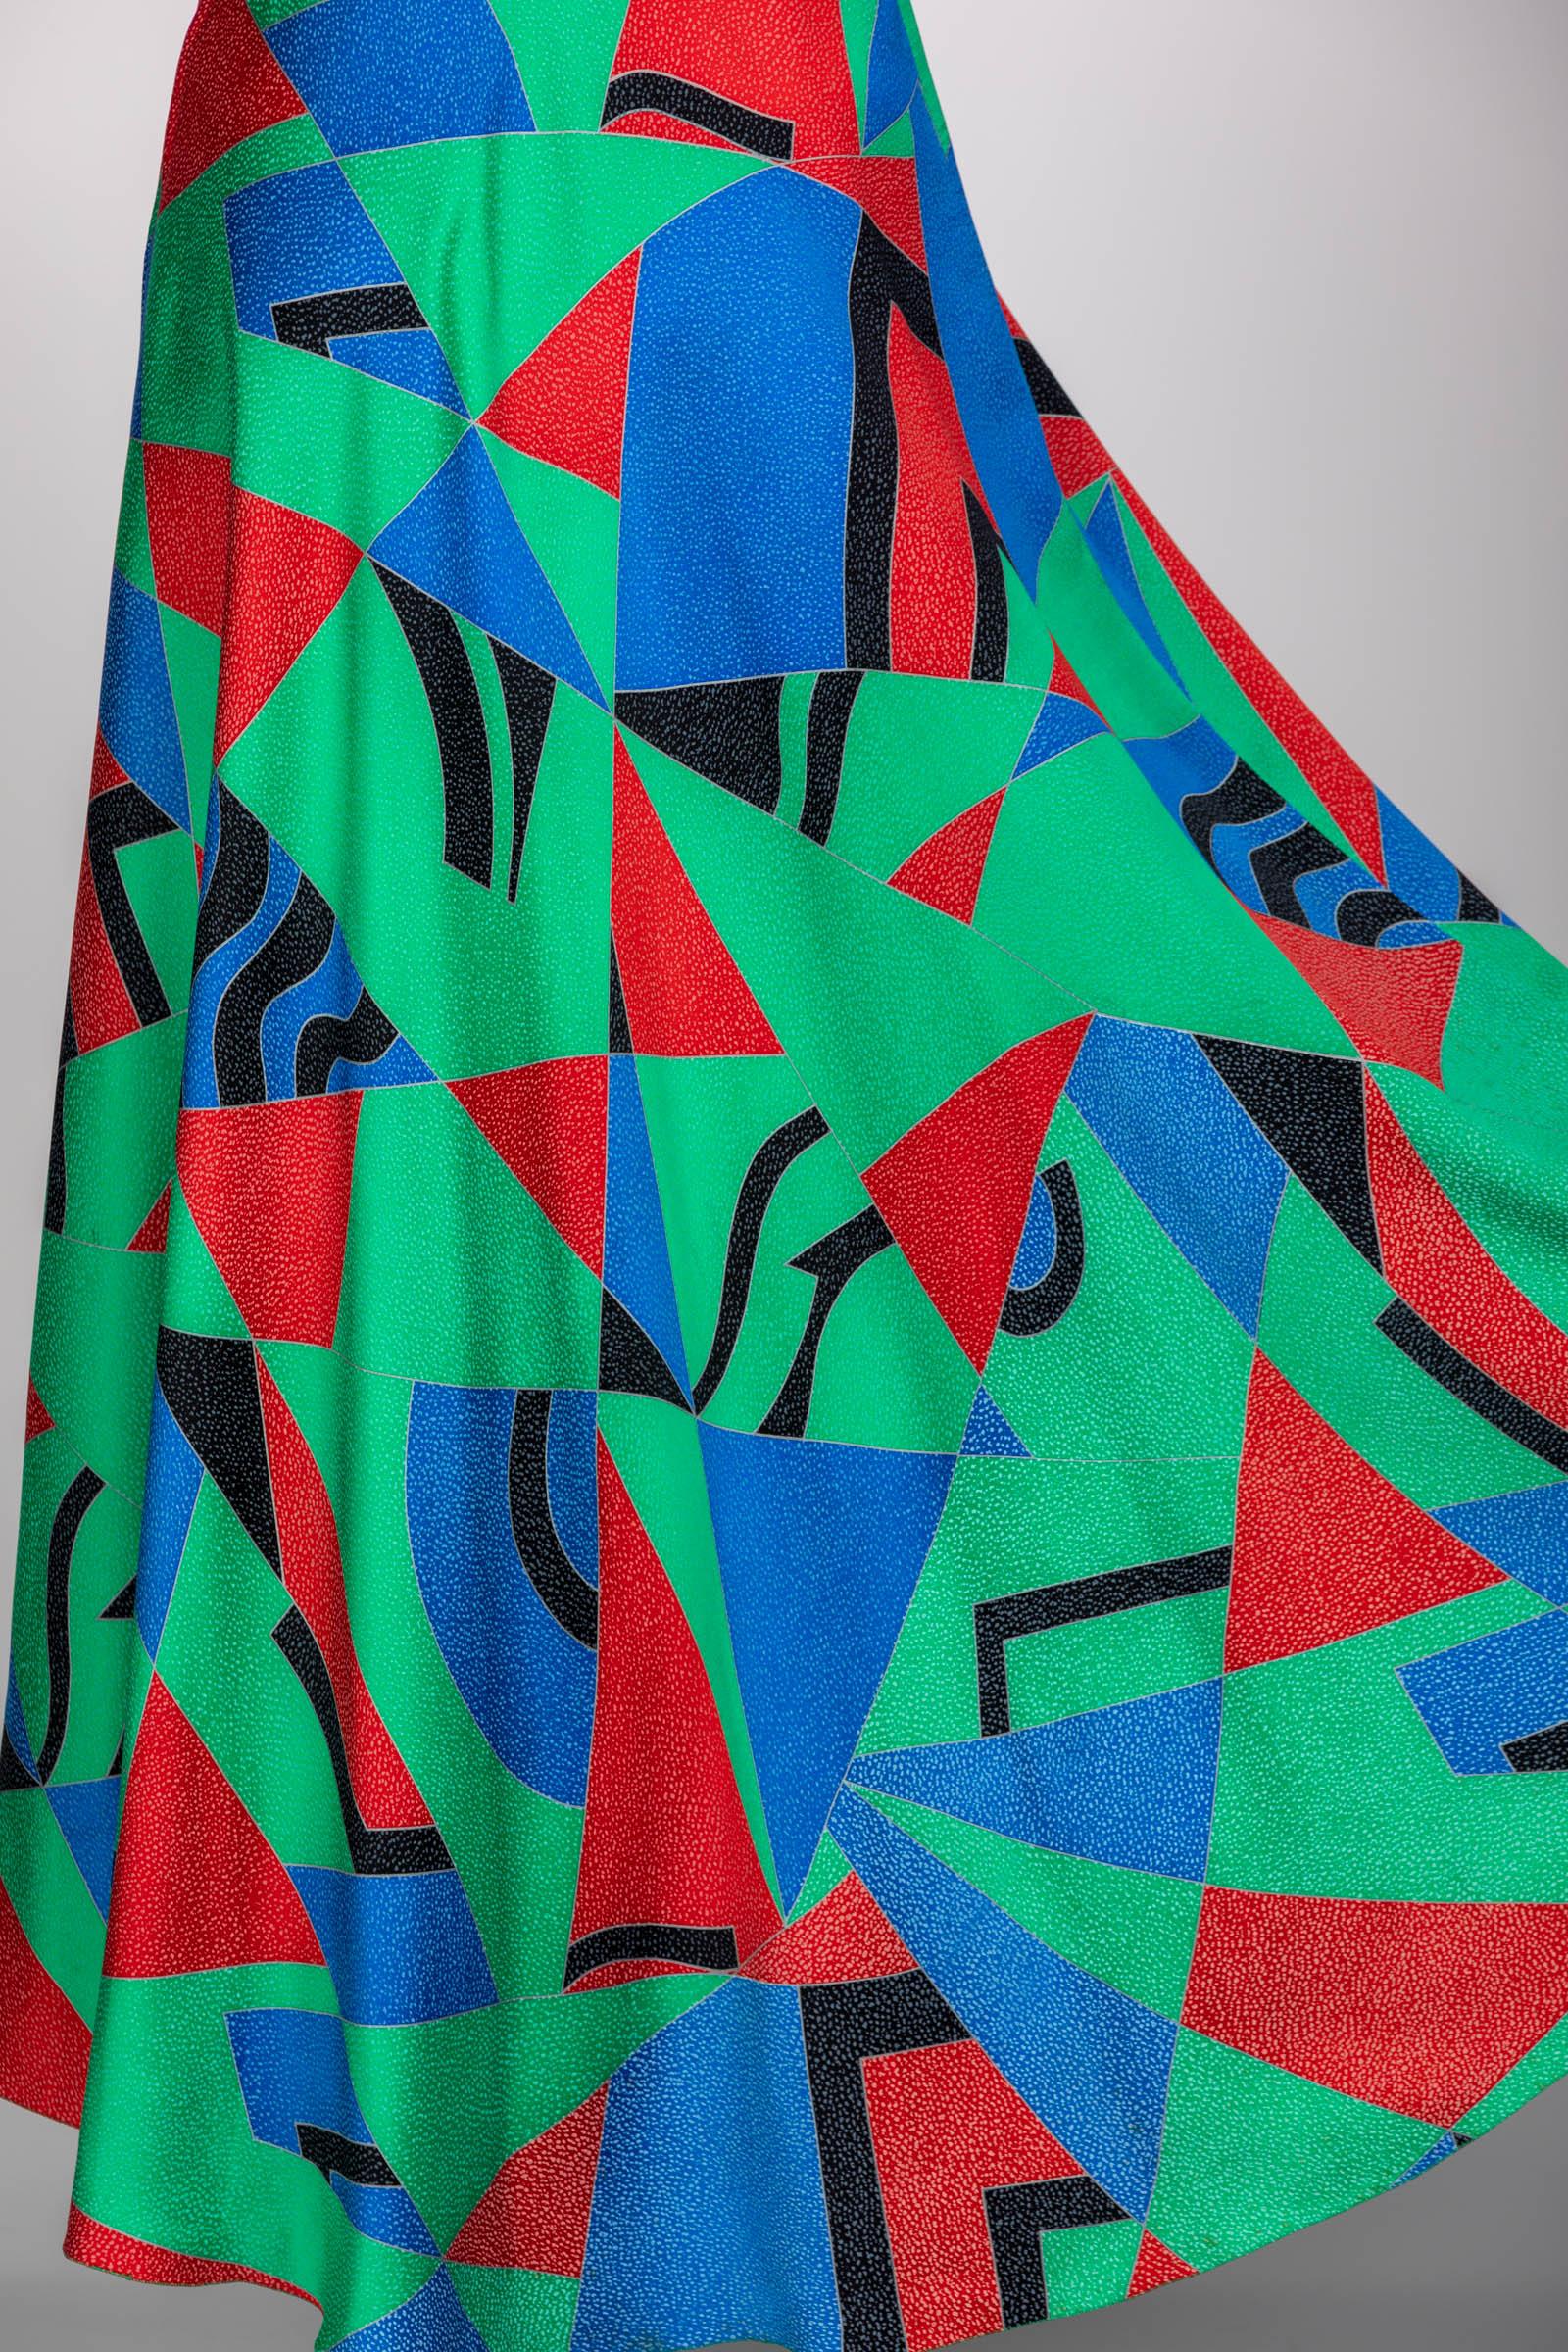 Chloe Karl Lagerfeld Cubist Green Silk Print Sleeveless Dress, 1970s 2